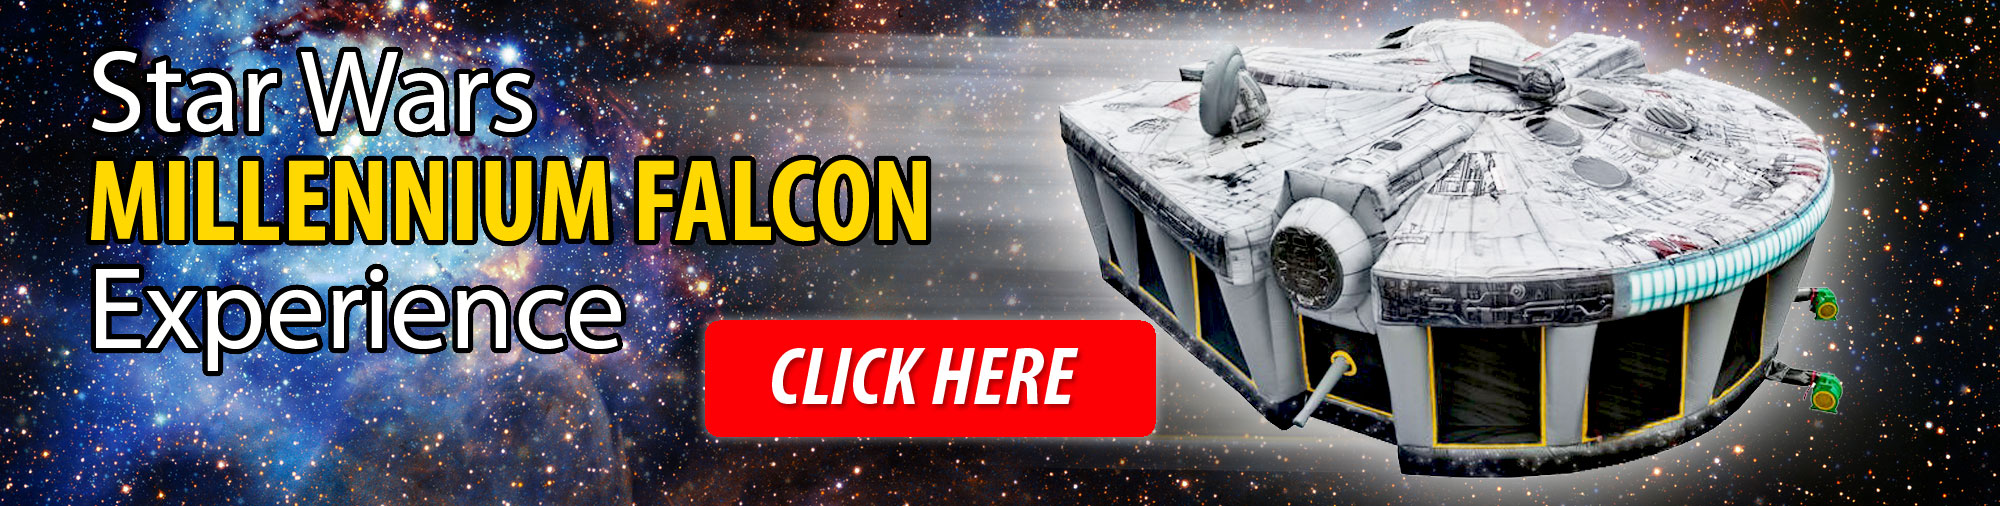 Star Wars Millennium Falcon Experience